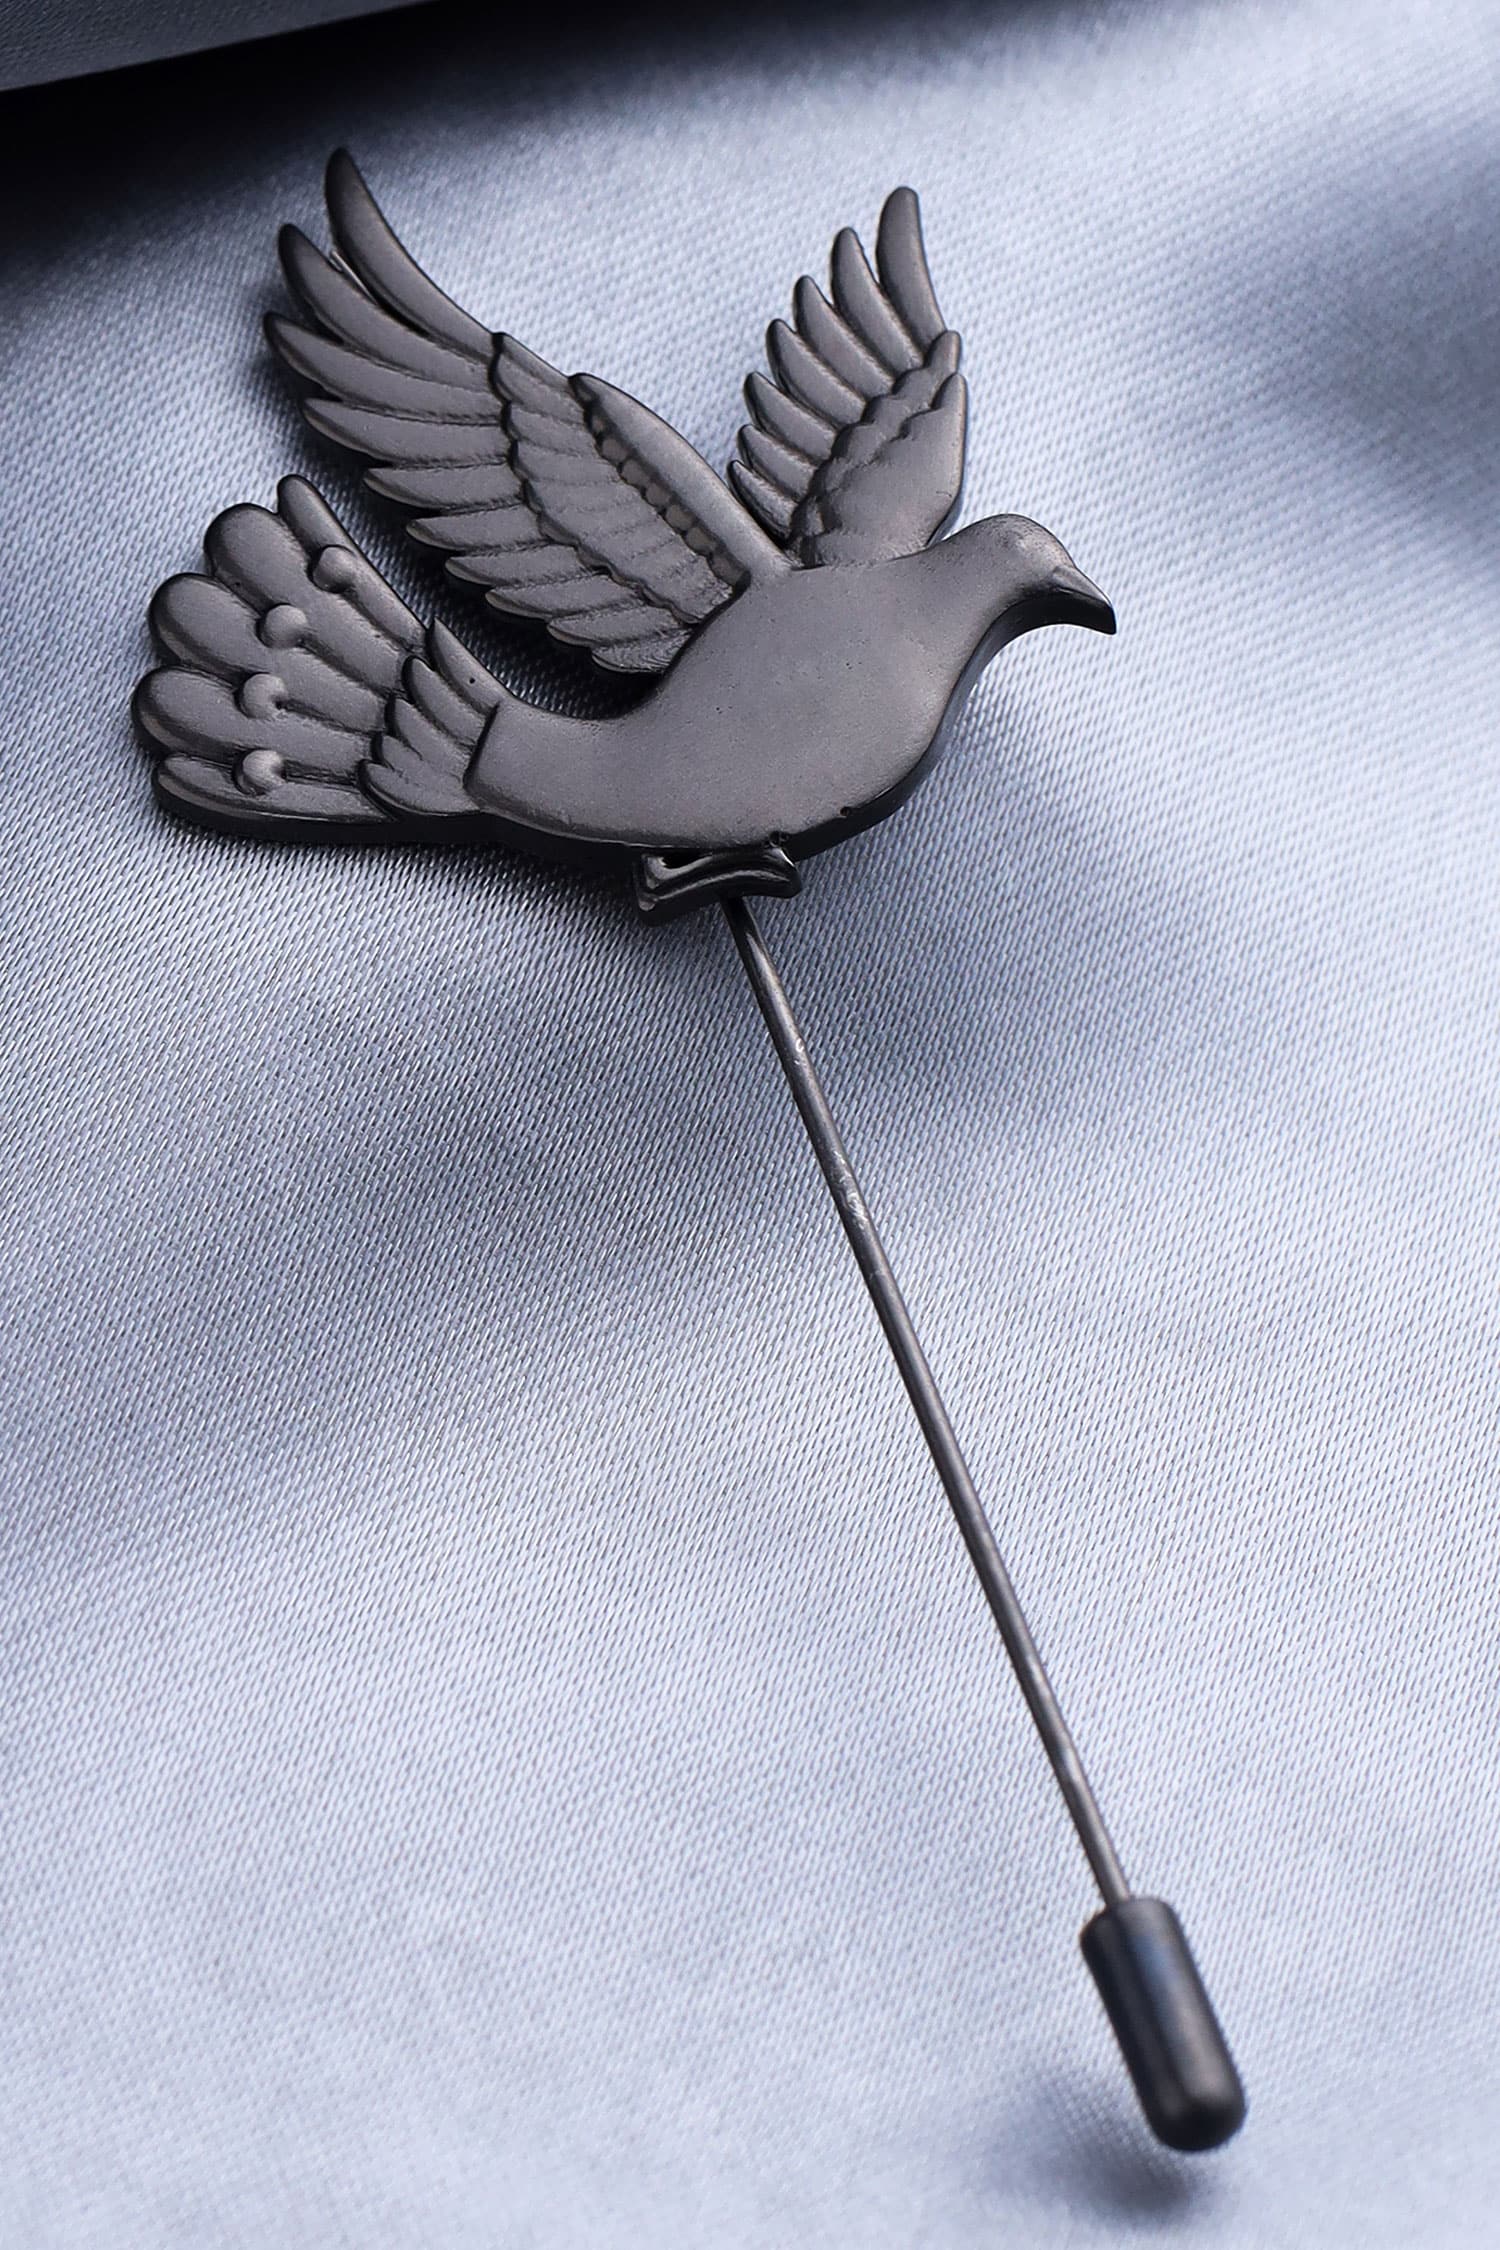 Cosa Nostraa Black Flying Bird Lapel Pin